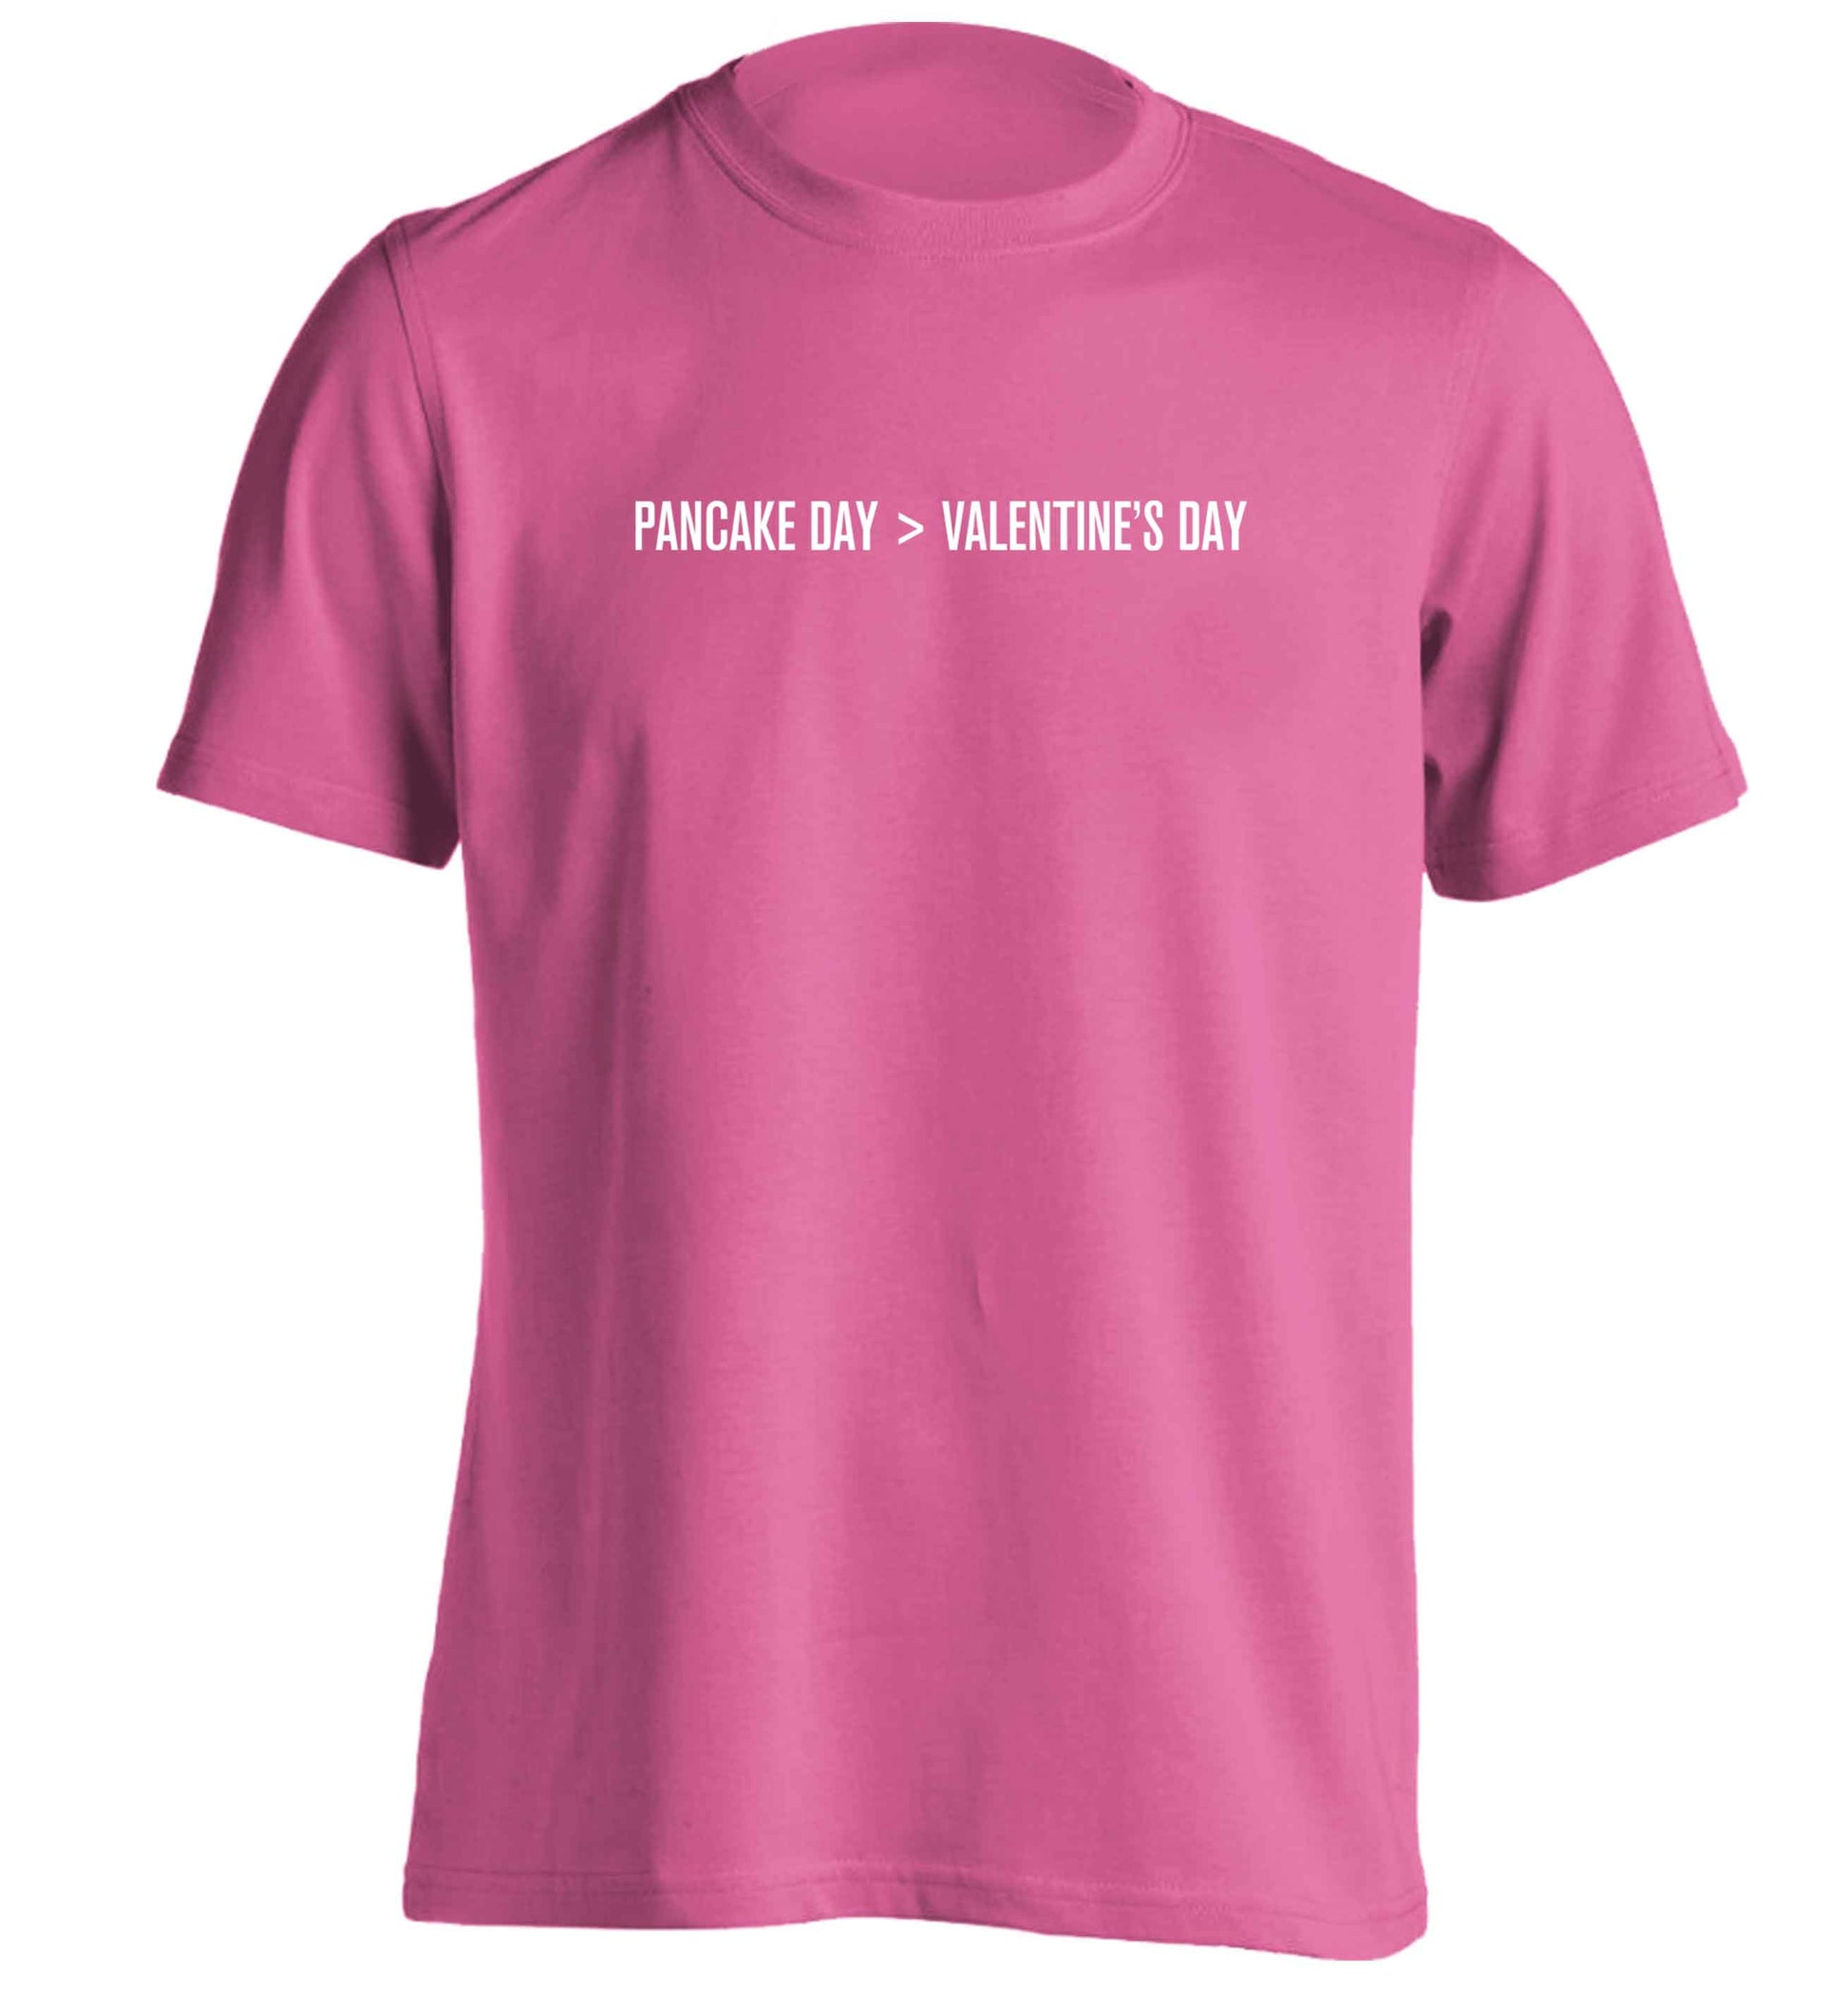 Pancake day > valentines day adults unisex pink Tshirt 2XL